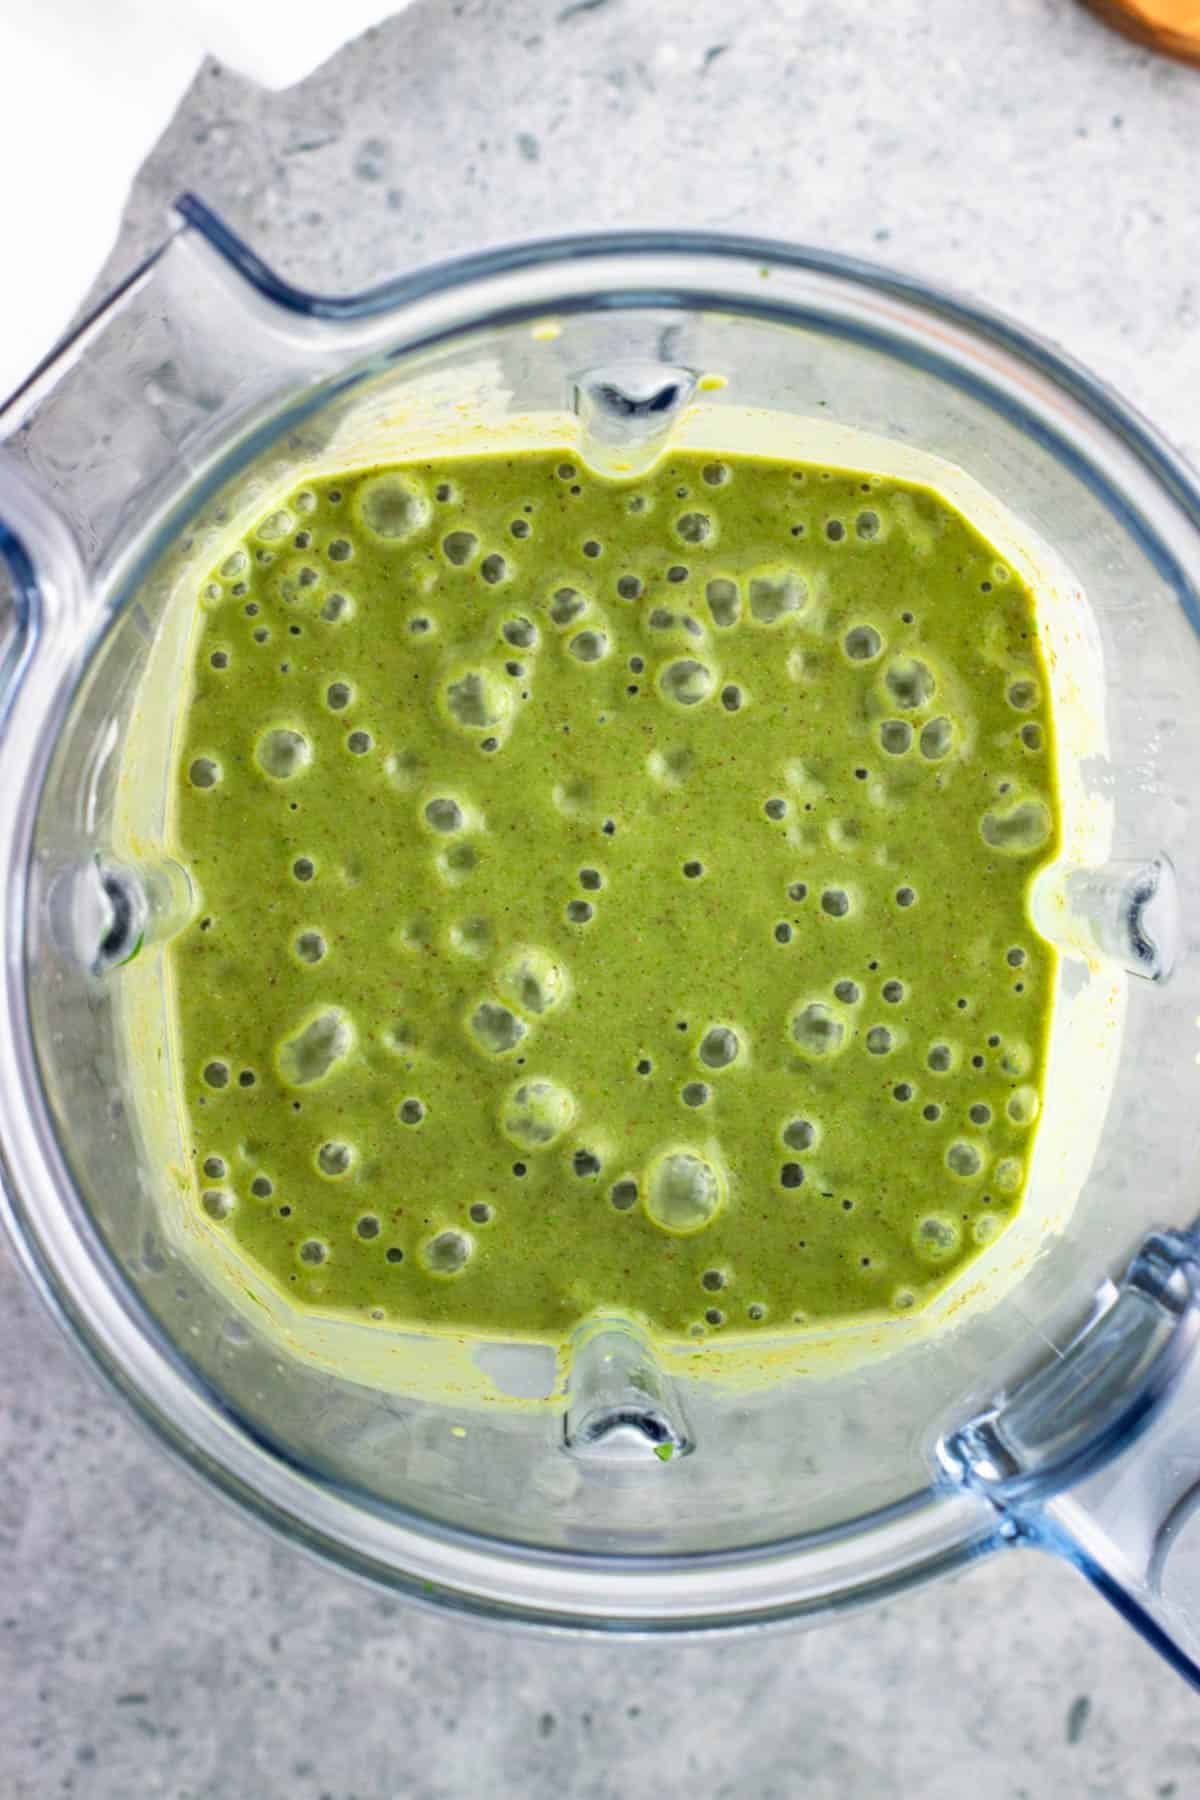 Fully blended green smoothie in a blender.